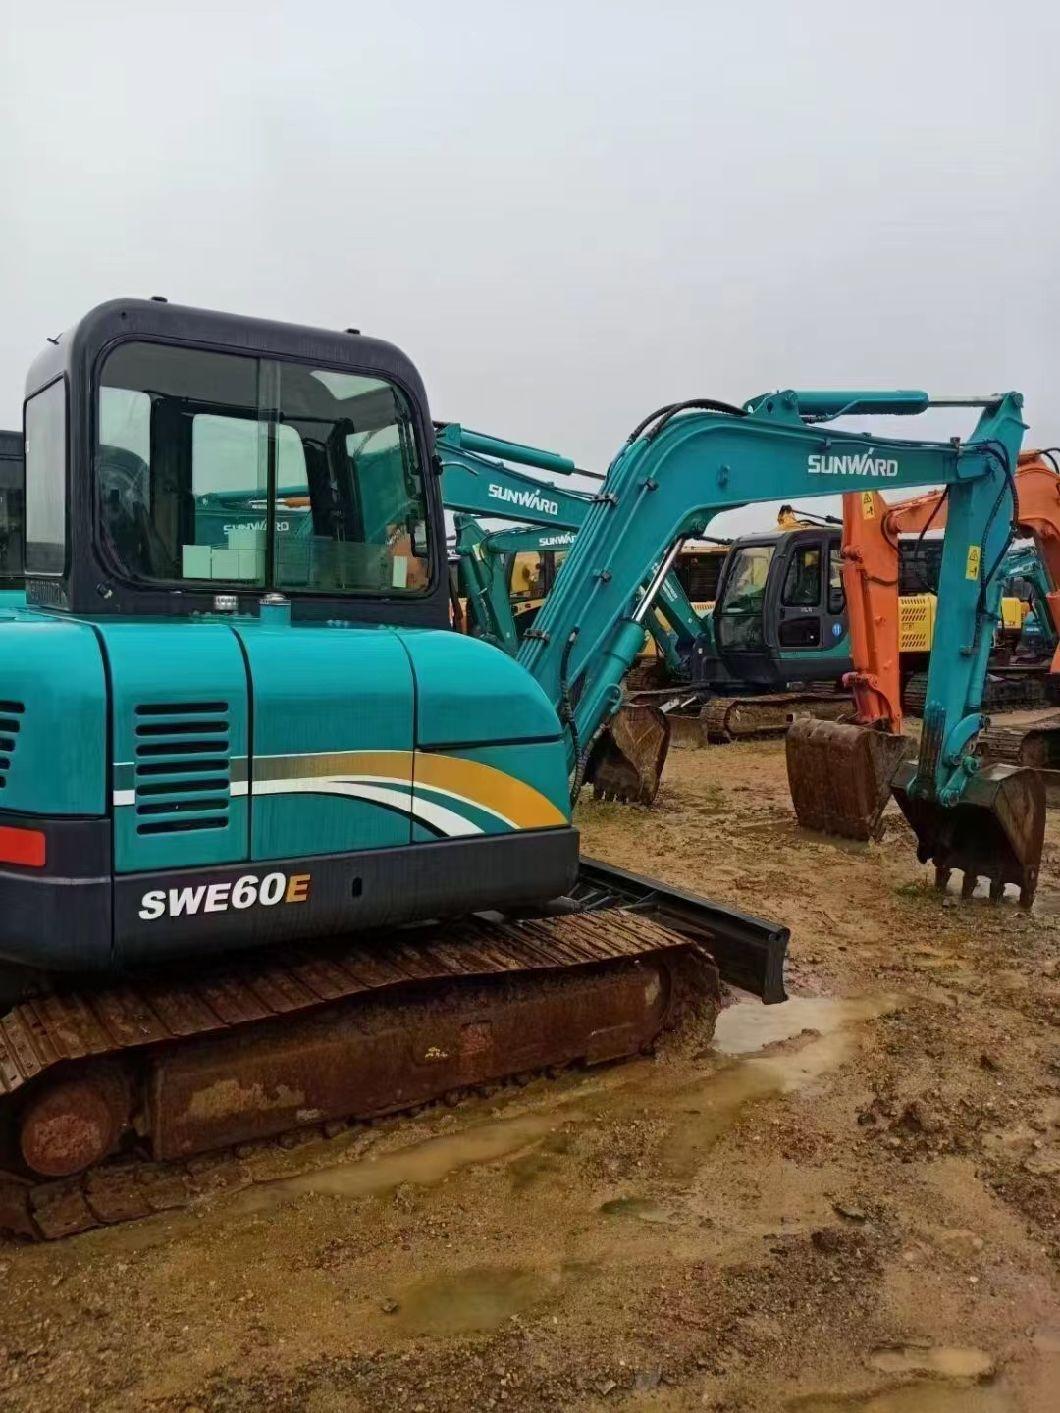 Sunward Swe60e Used Second Hand Crawler Excavator Caterpillar Hitachi 6 Ton Swe50e Swe90e Swe70e Swe80e Swe100e Excavators Chinese Brand for Sale Price